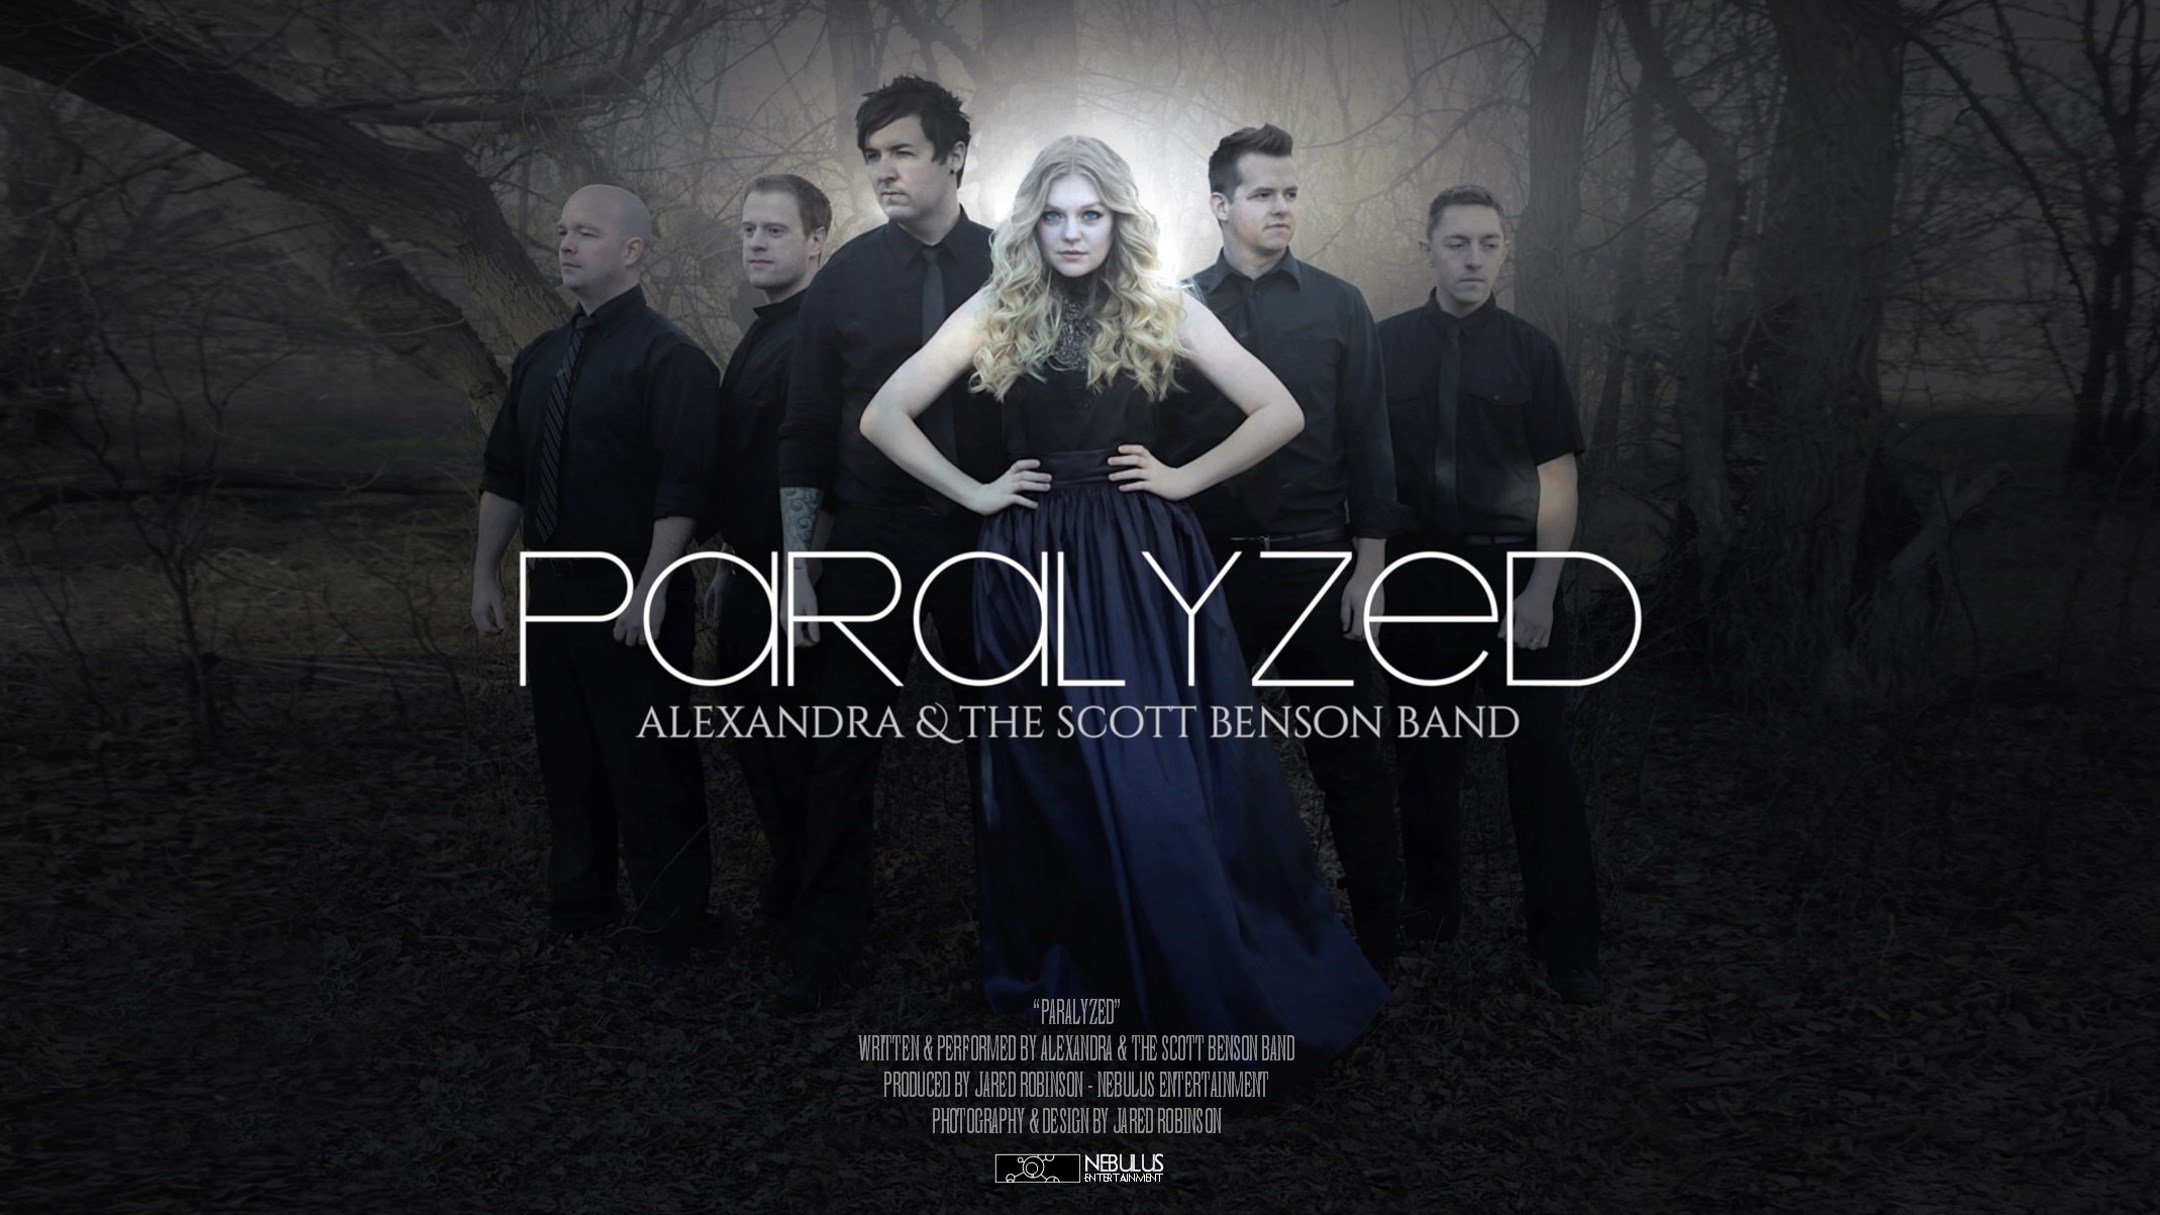 Alexandra and the Scott Benson Band